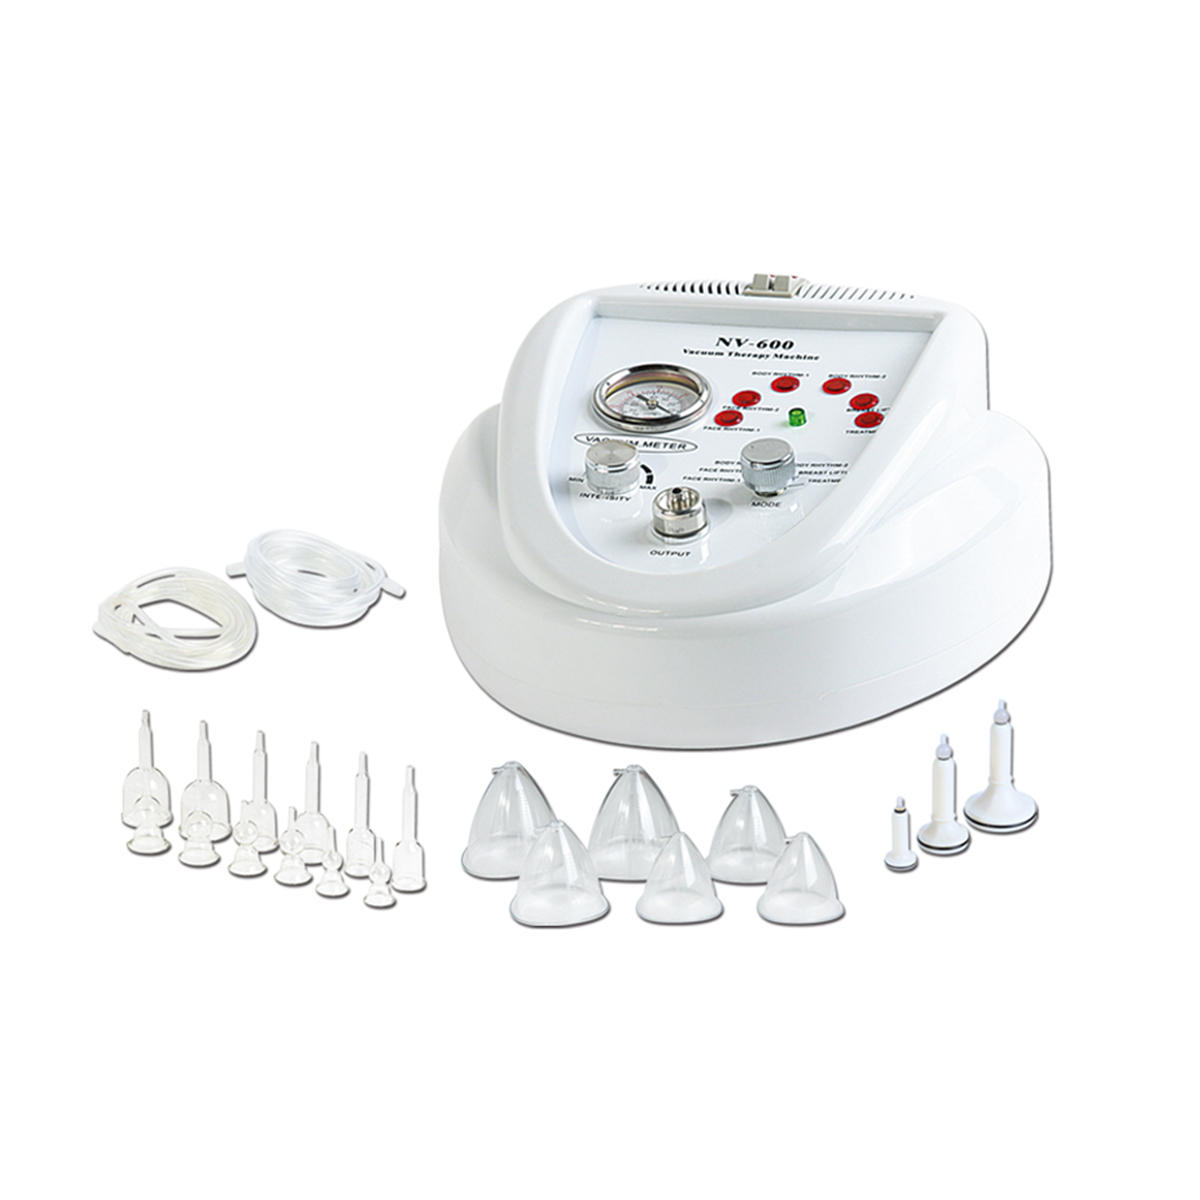 NV-600 Vacuümmassage Therapie Lichaamsverzorging Borstvergroting Massager